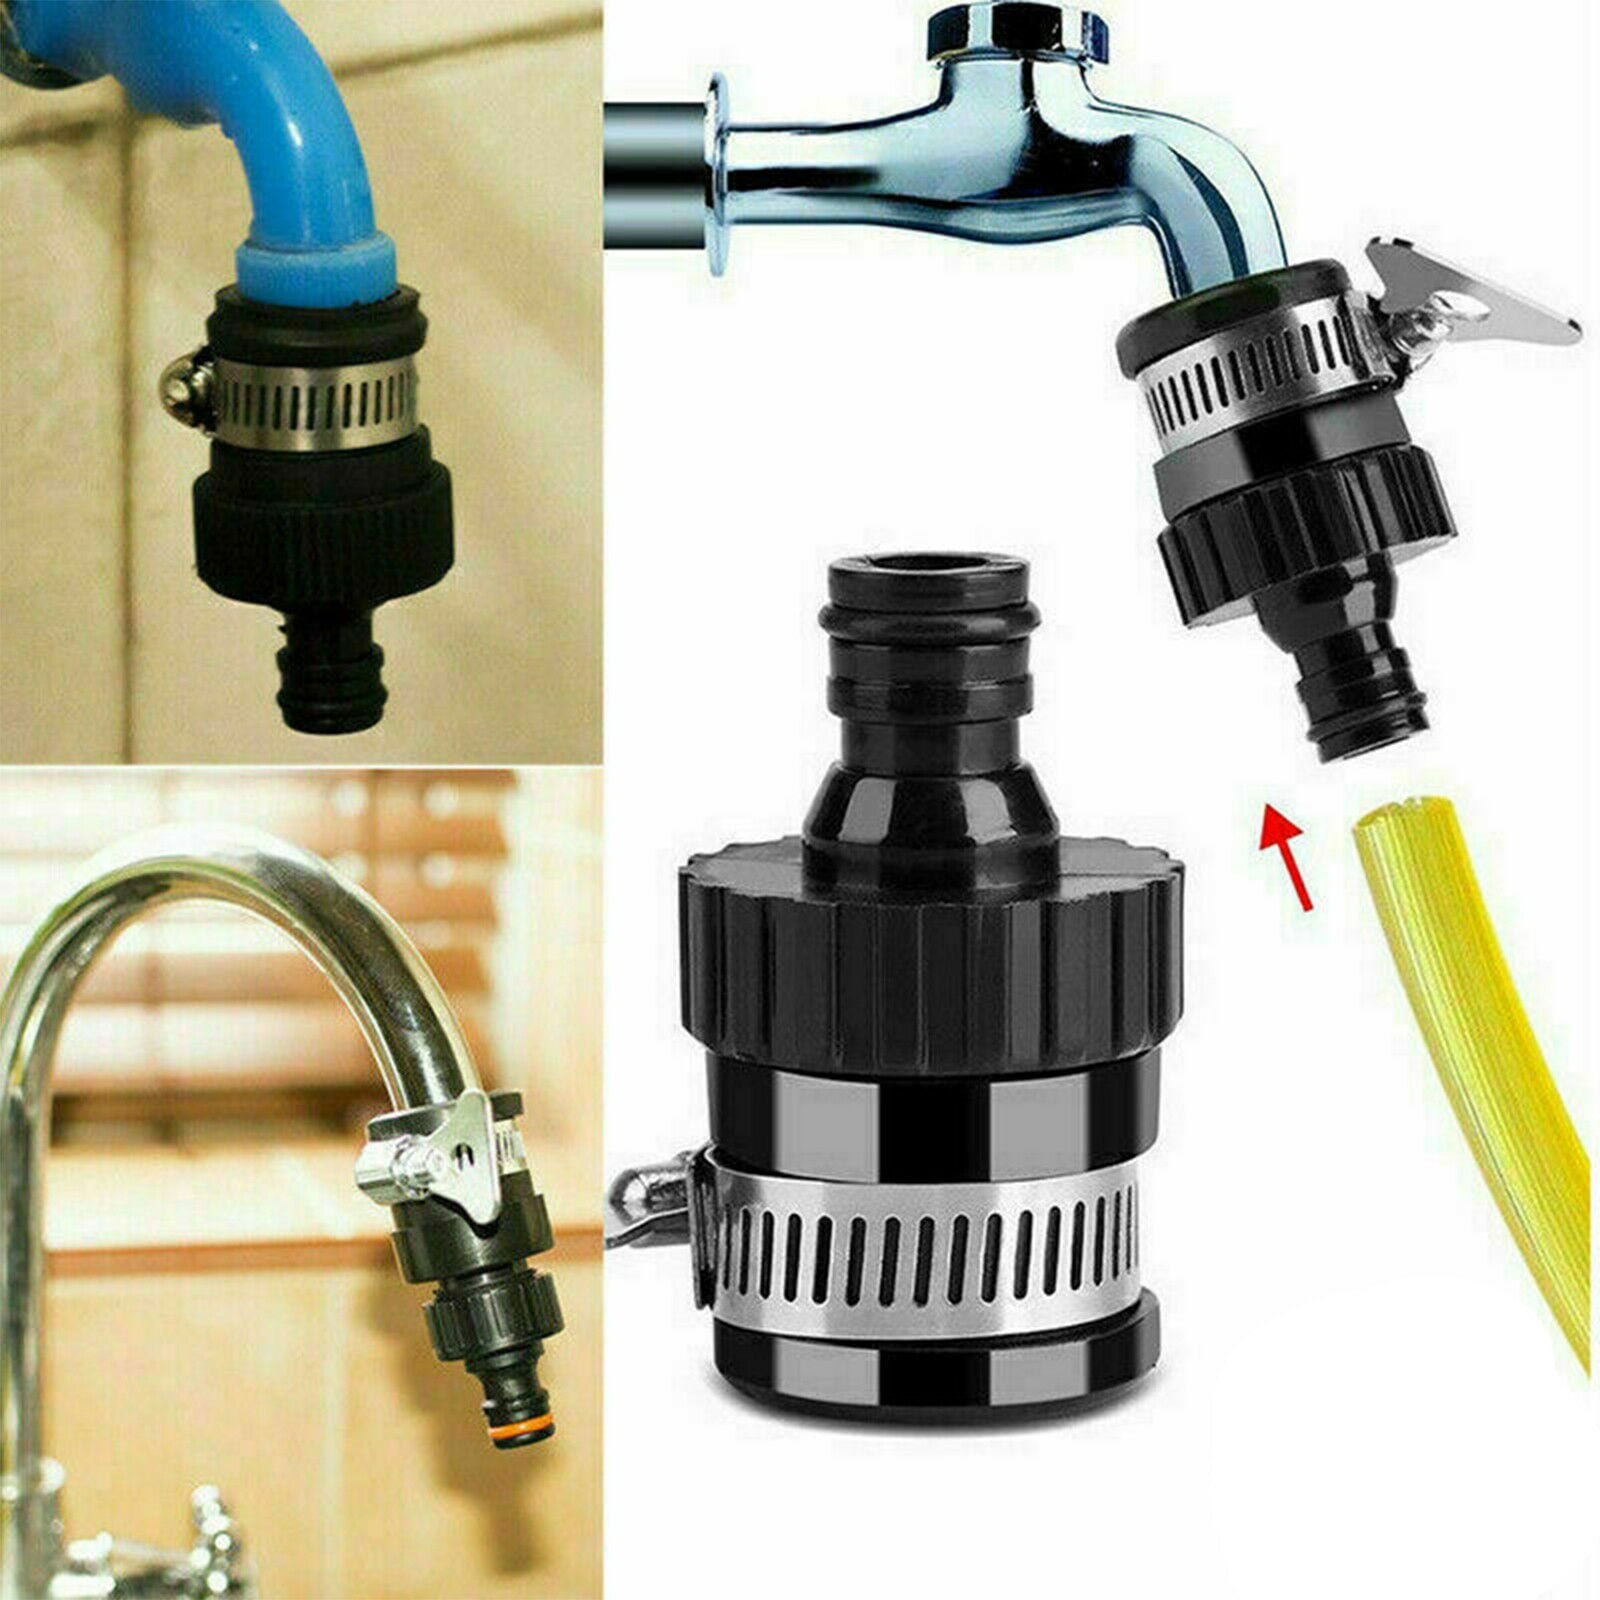 Universal Garden Hose Pipe Tap Connector Mixer Kitchen Bath Tap Faucet Adapter 